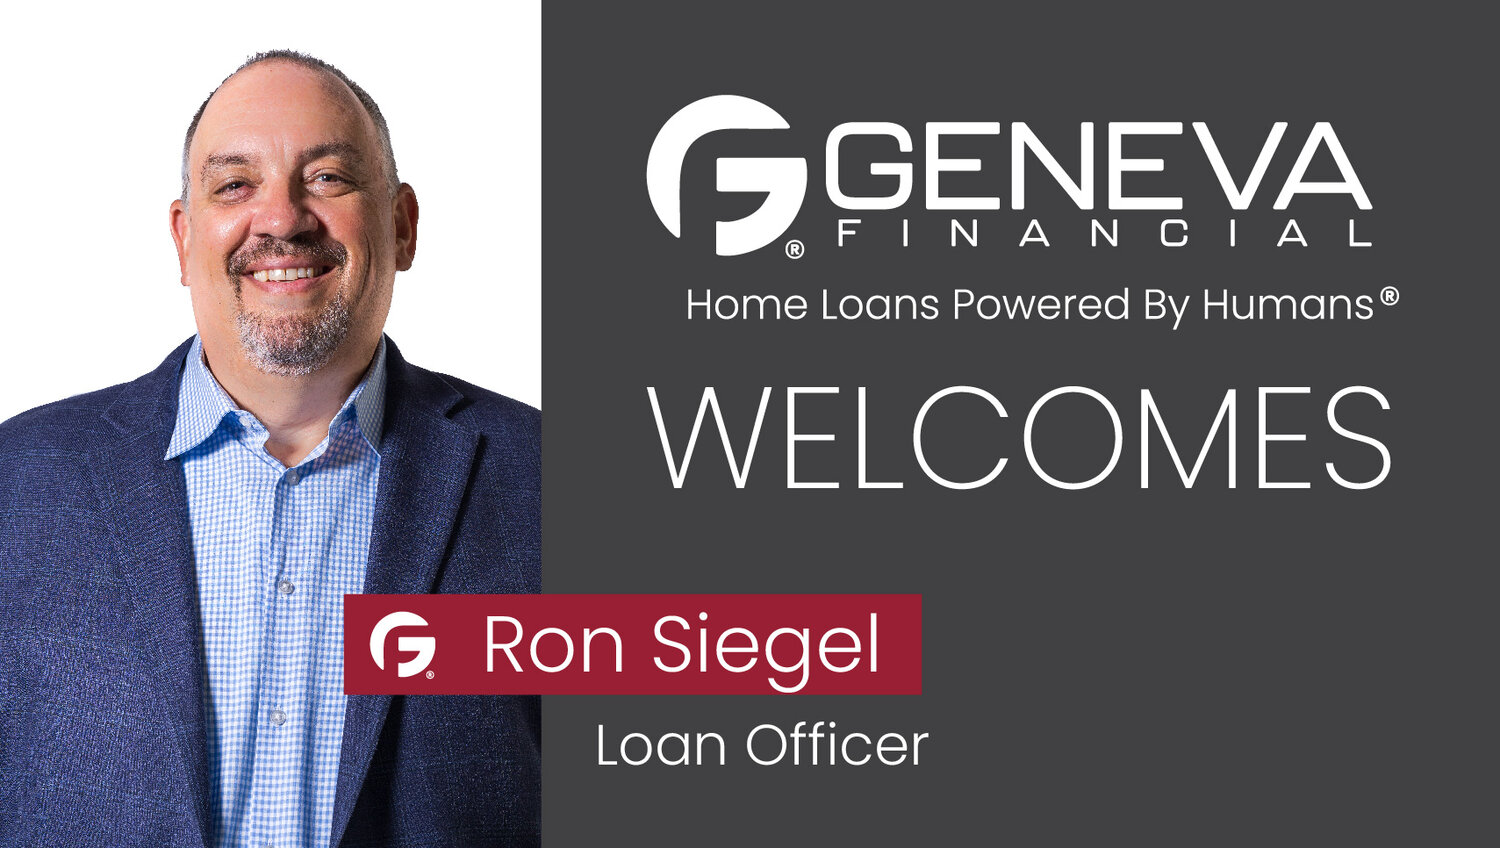 Ron Siegel, Loan Officer, California